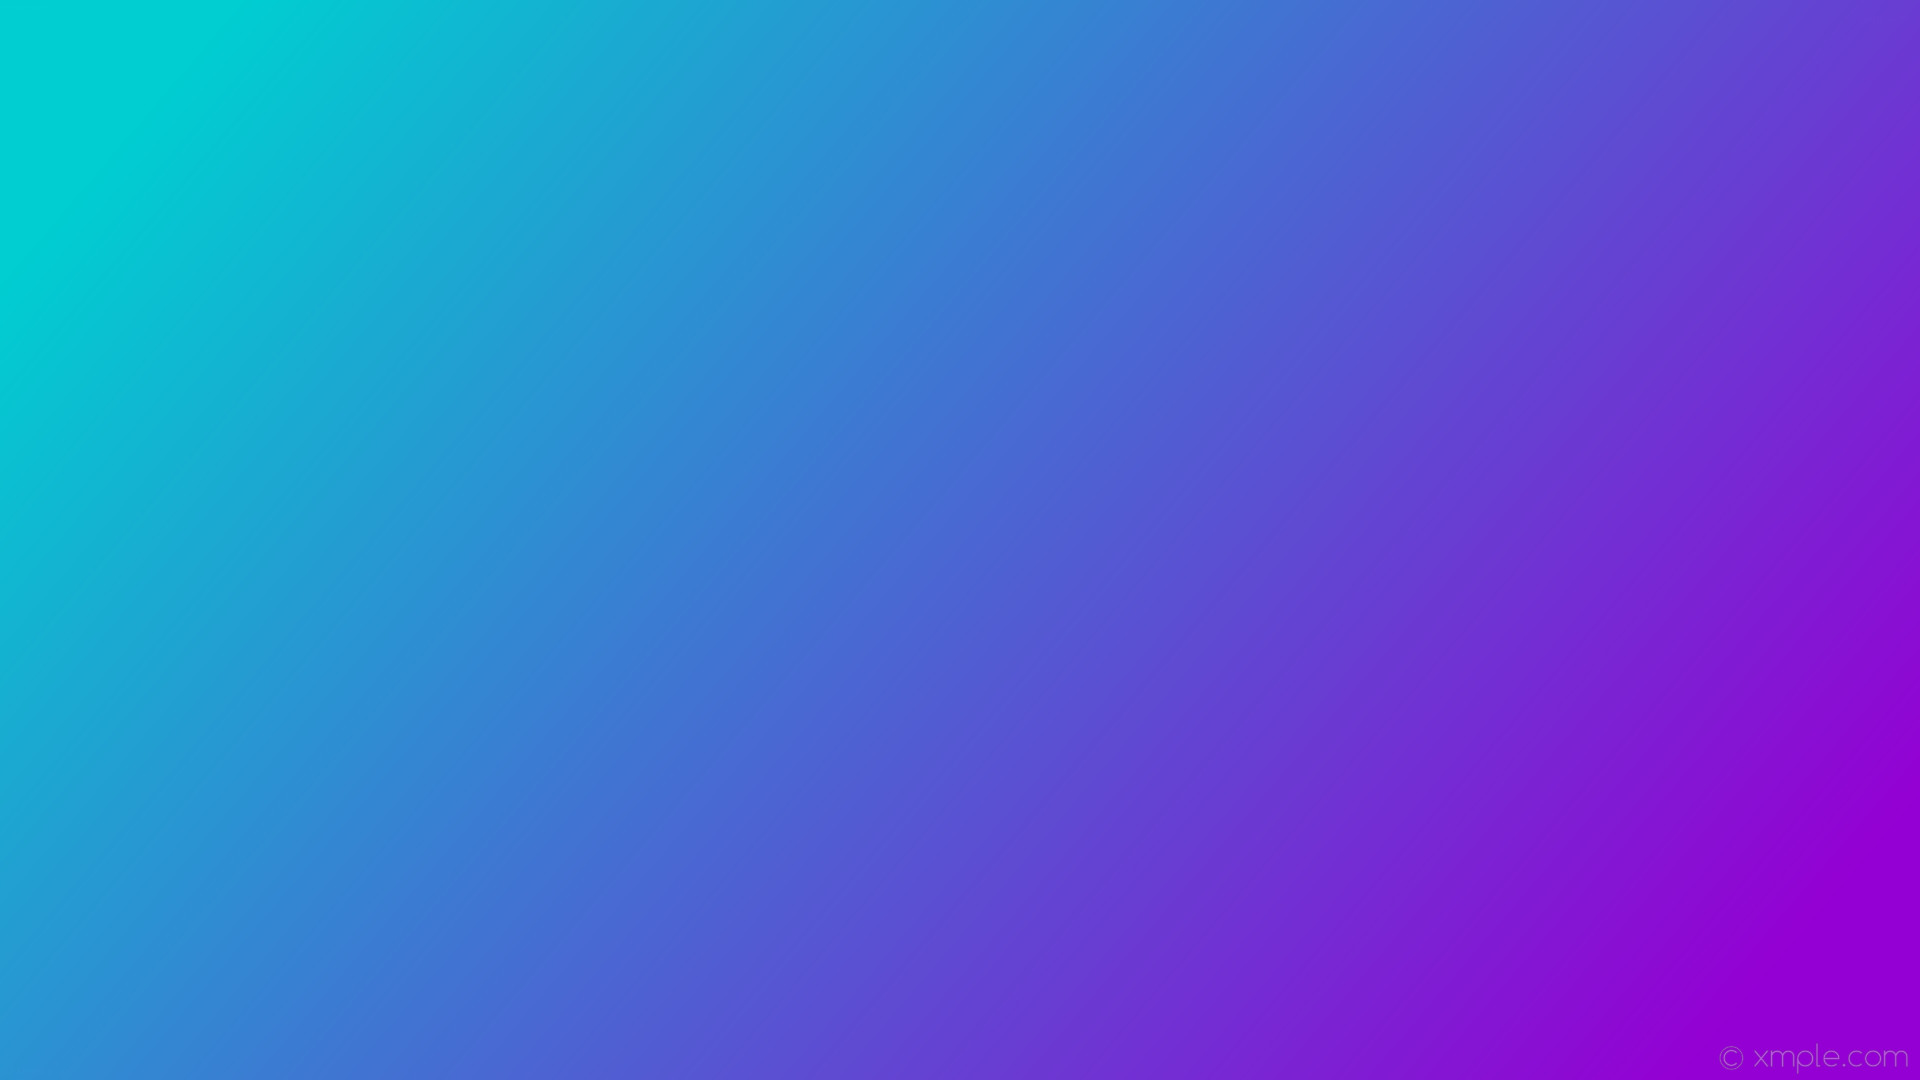 1920x1080 wallpaper gradient purple blue linear dark violet dark turquoise #9400d3  #00ced1 345Â°